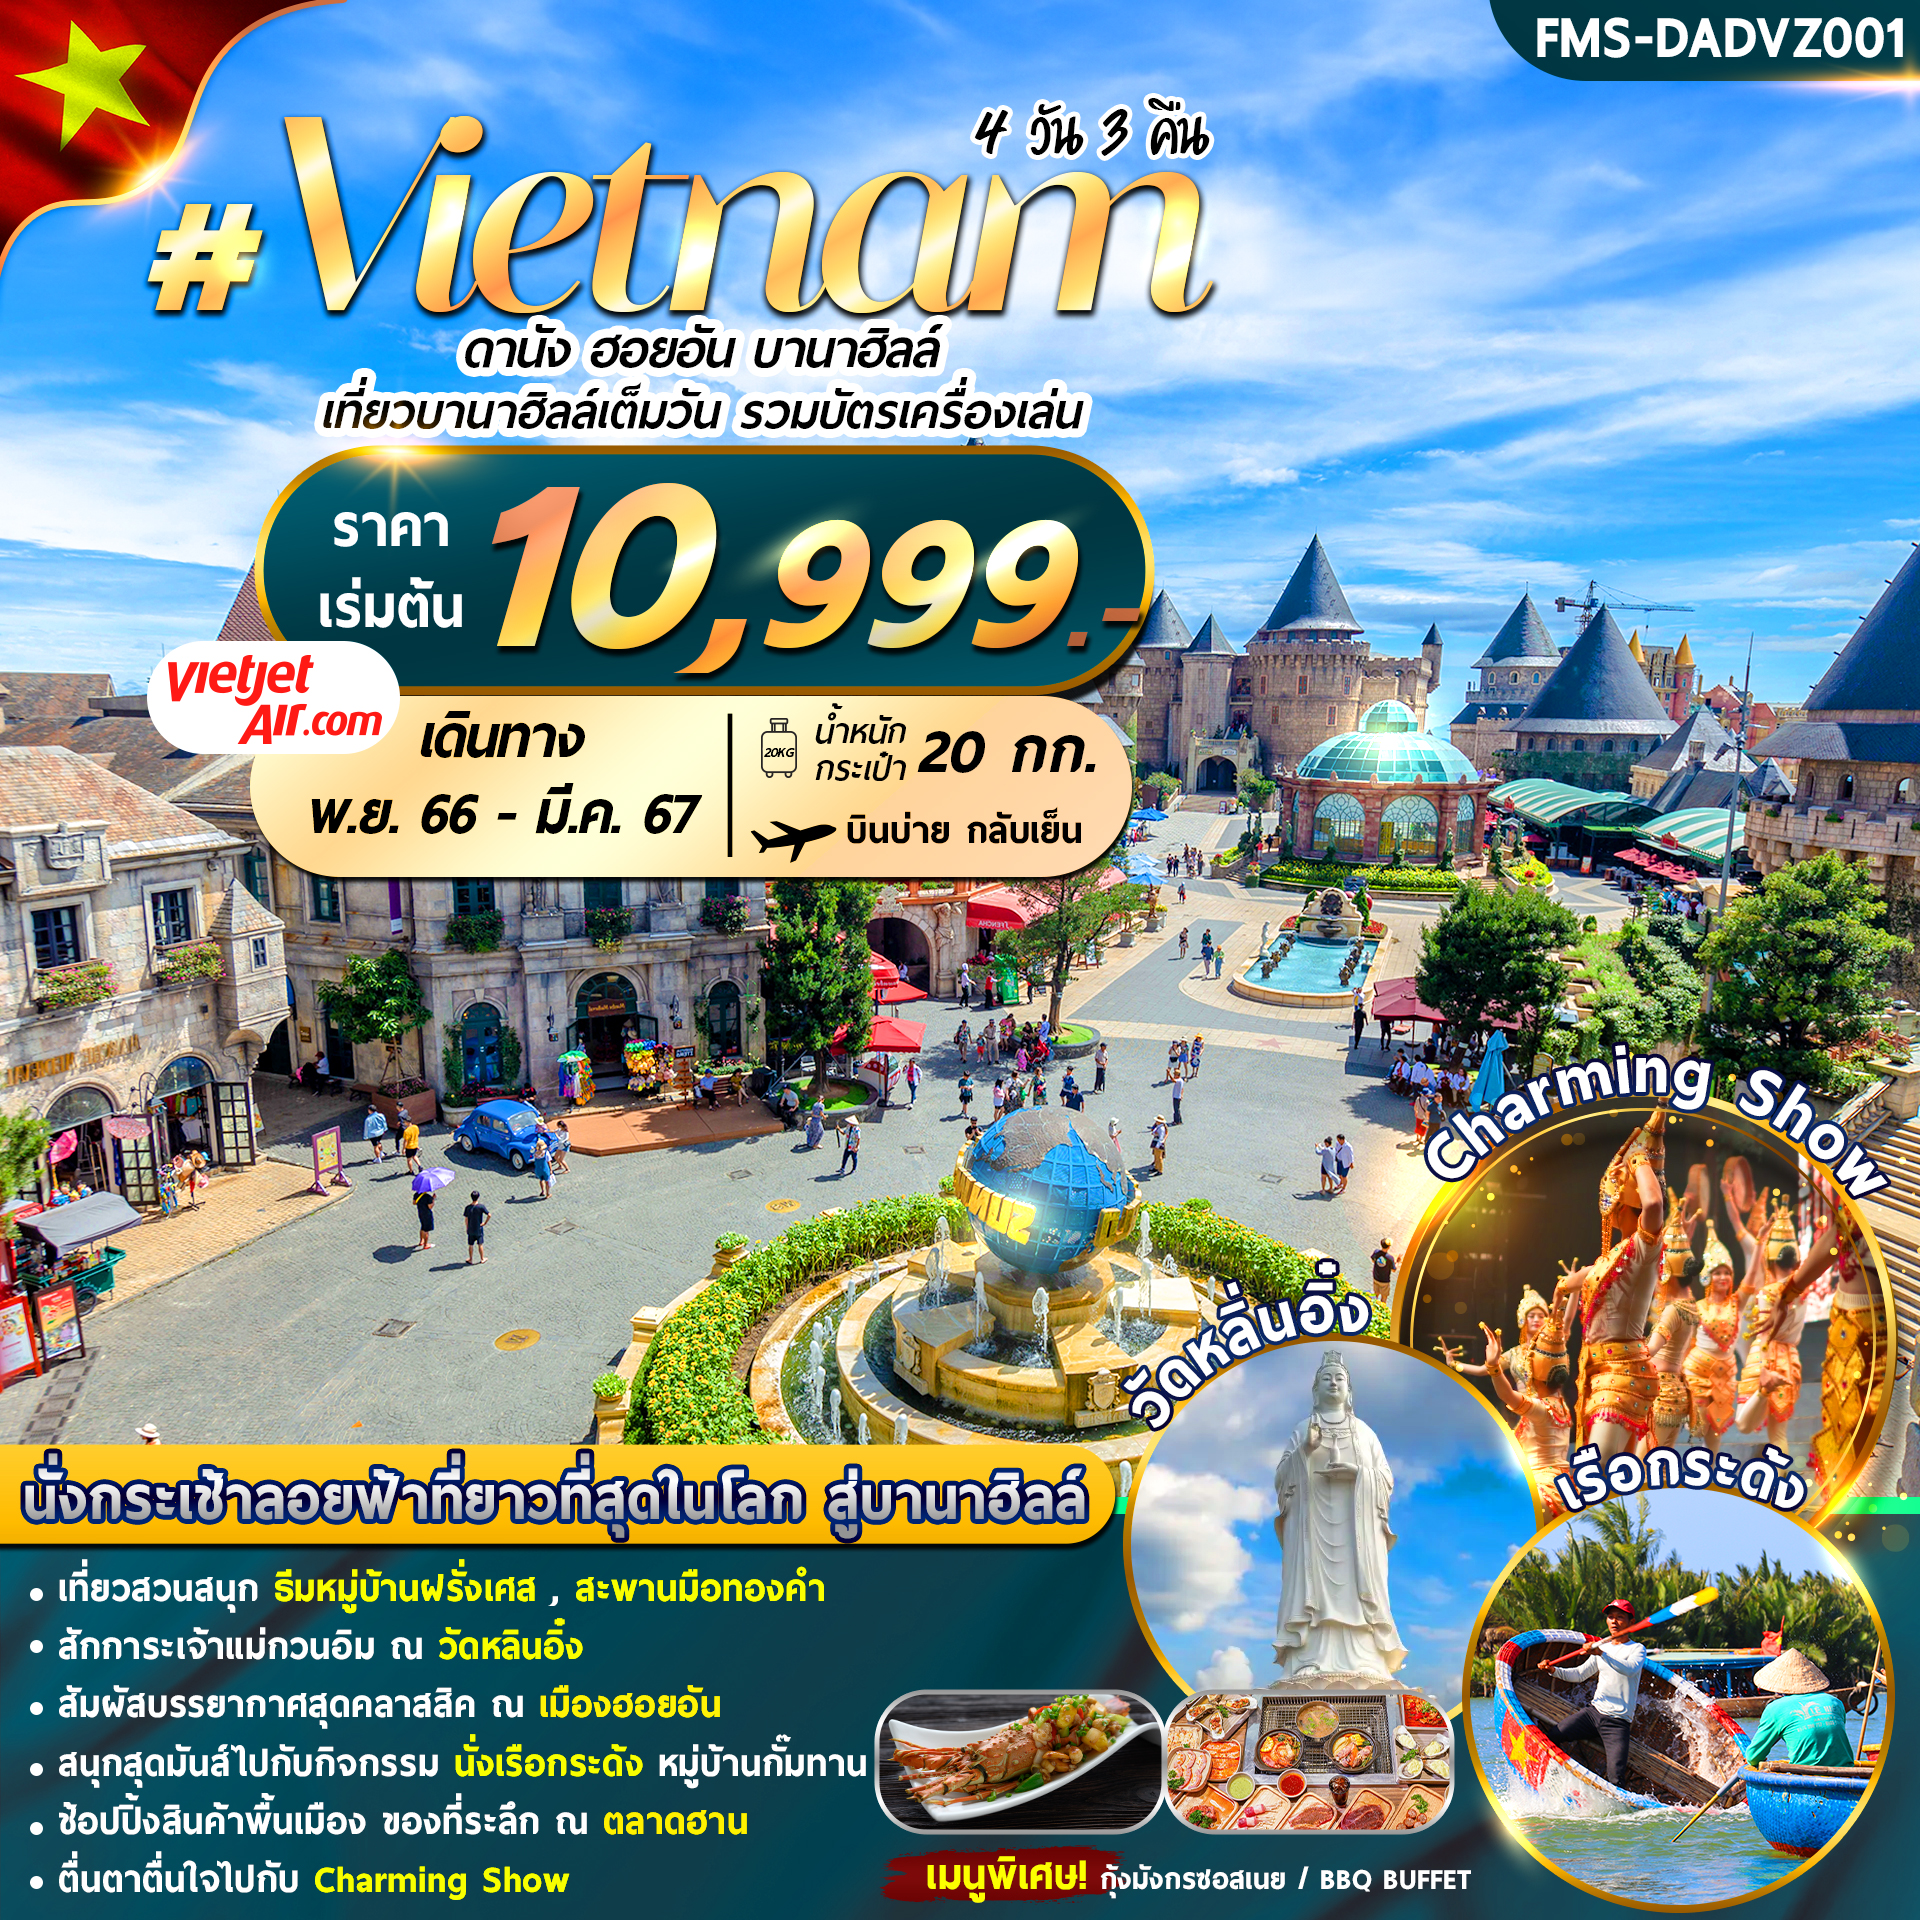 #Vietnam ดานัง ฮอยอัน บานาฮิลล์ เที่ยวบานาฮิลล์เต็มวัน รวมบัตรเครื่องเล่น 4 วัน 3 คืน เดินทาง พ.ย.66 - มี.ค.67 เริ่มต้น 10,999.- Vietjet Air (VZ)